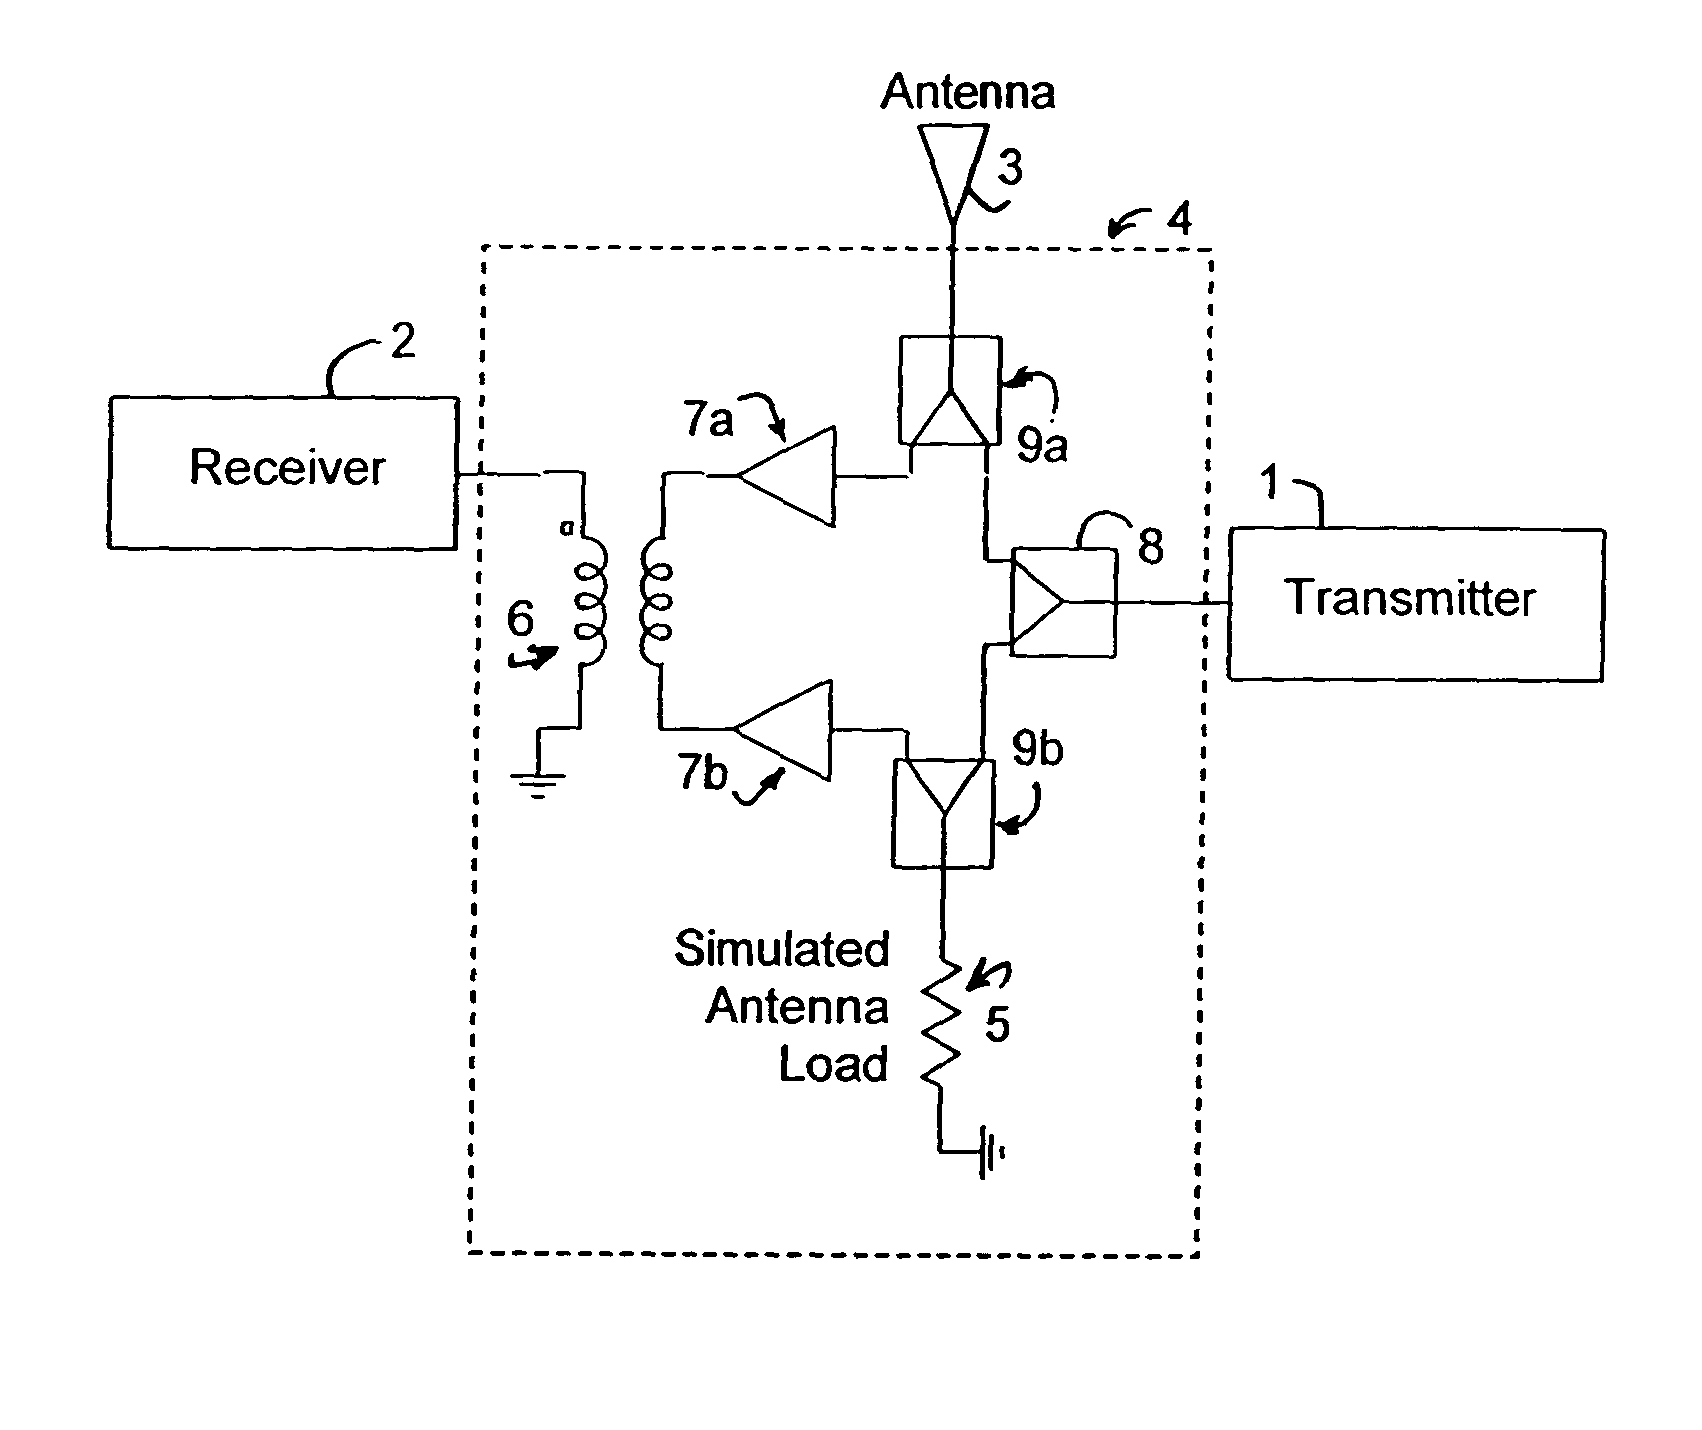 Quasi-circulator for antenna multi-coupler system